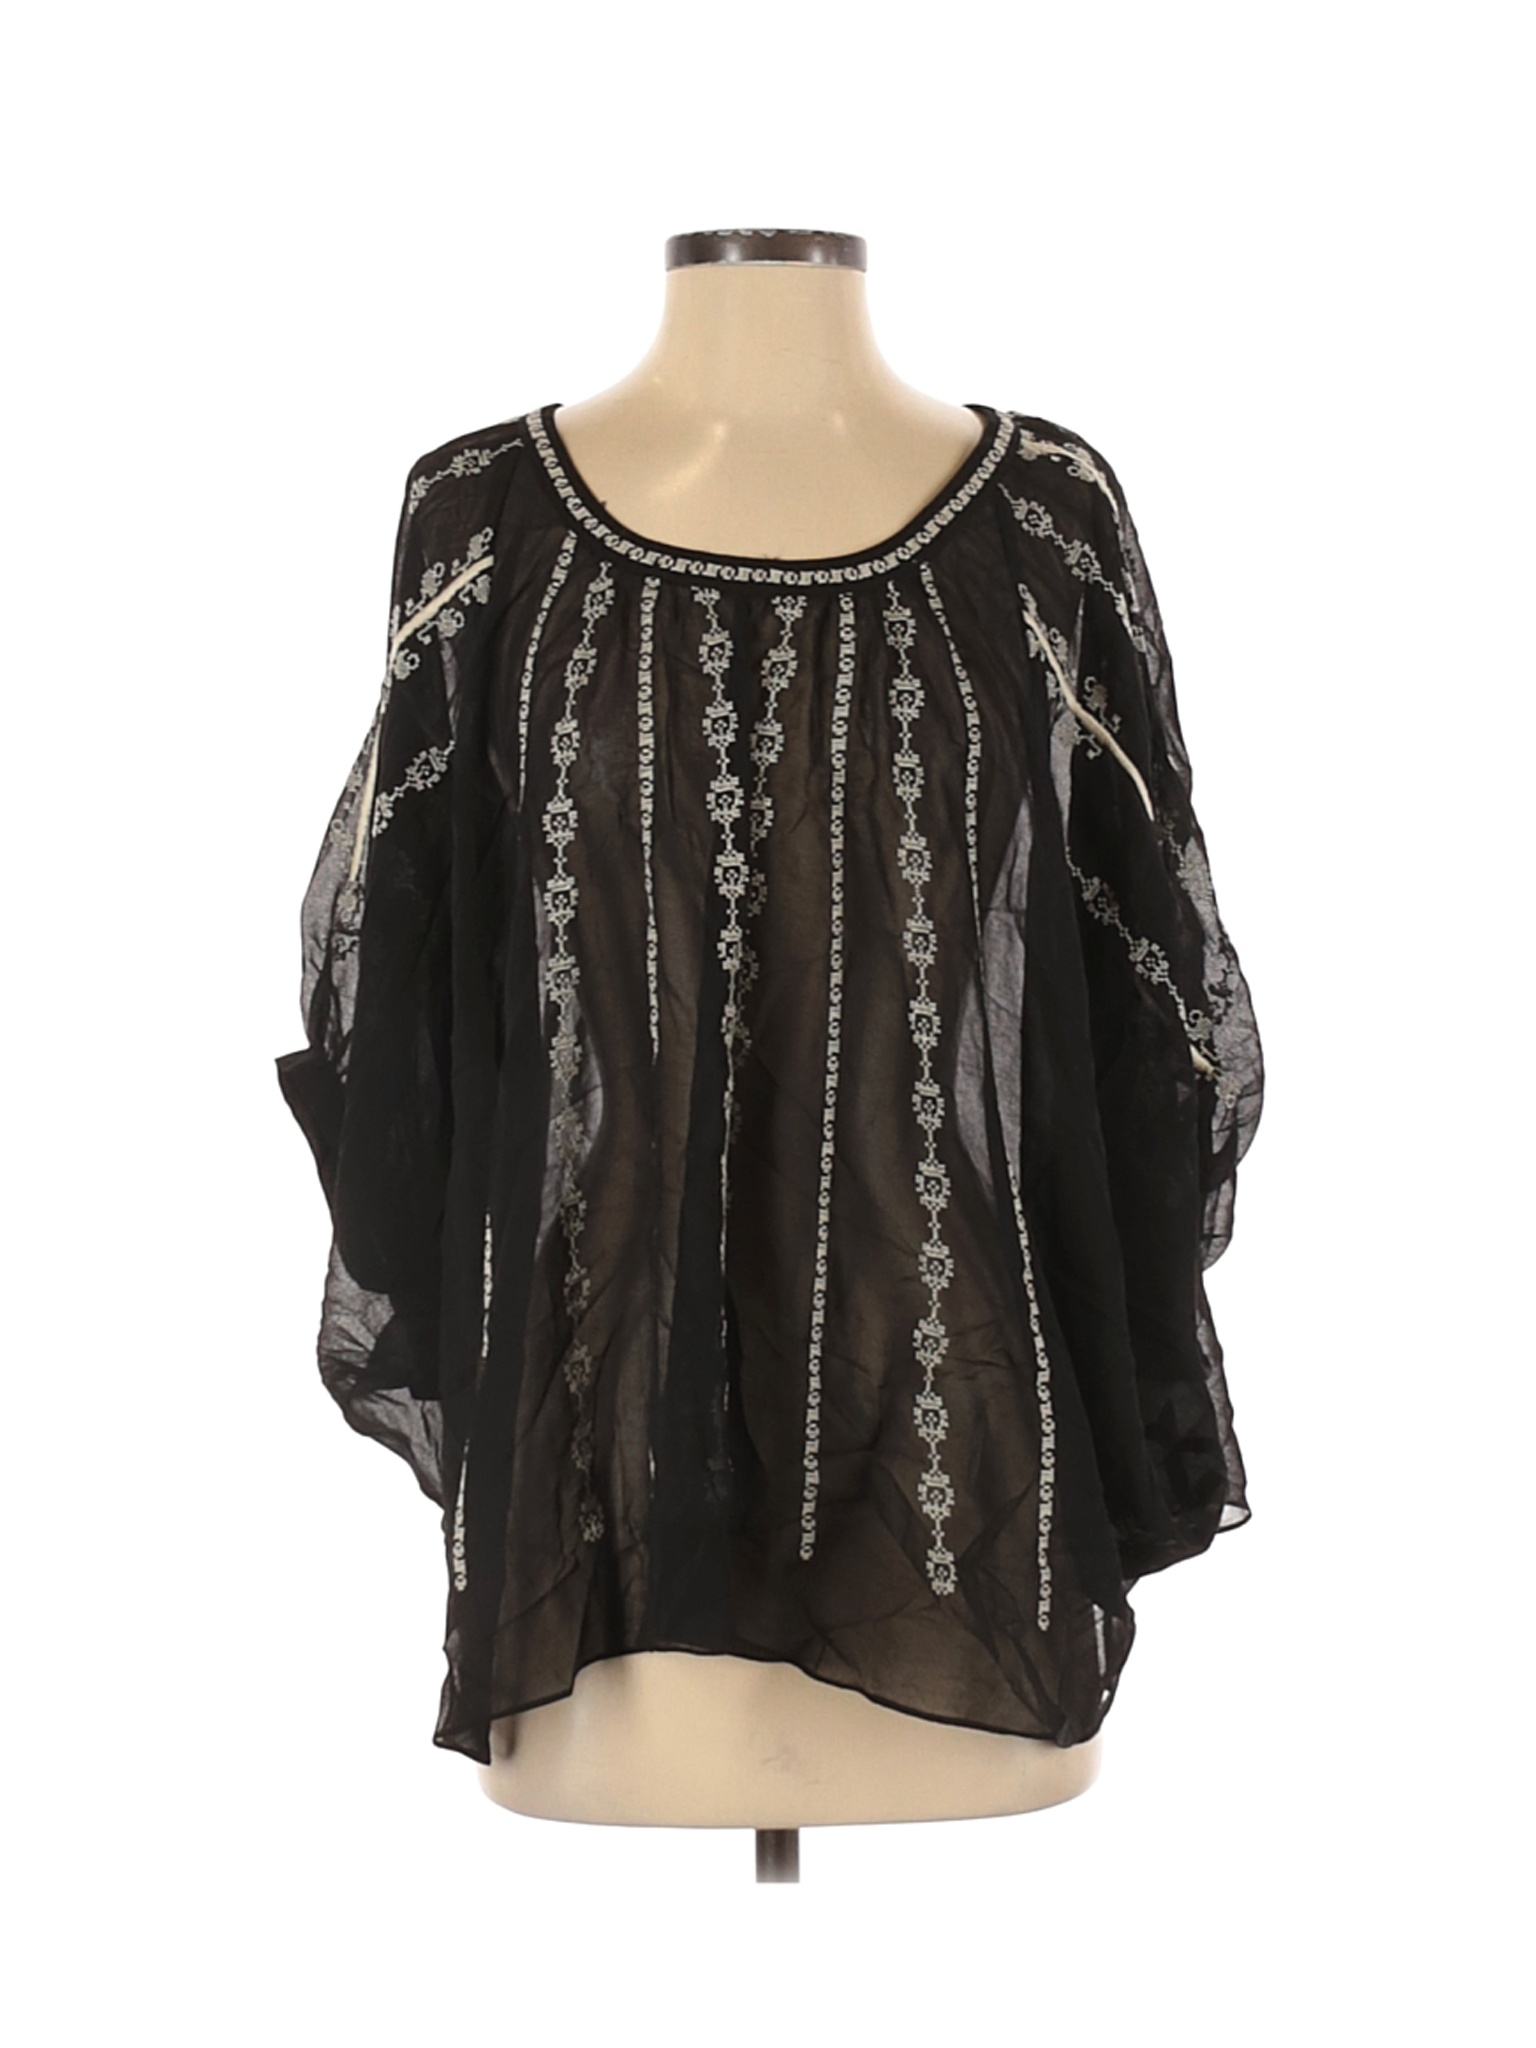 Ivy Jane Women Black 3/4 Sleeve Blouse S | eBay